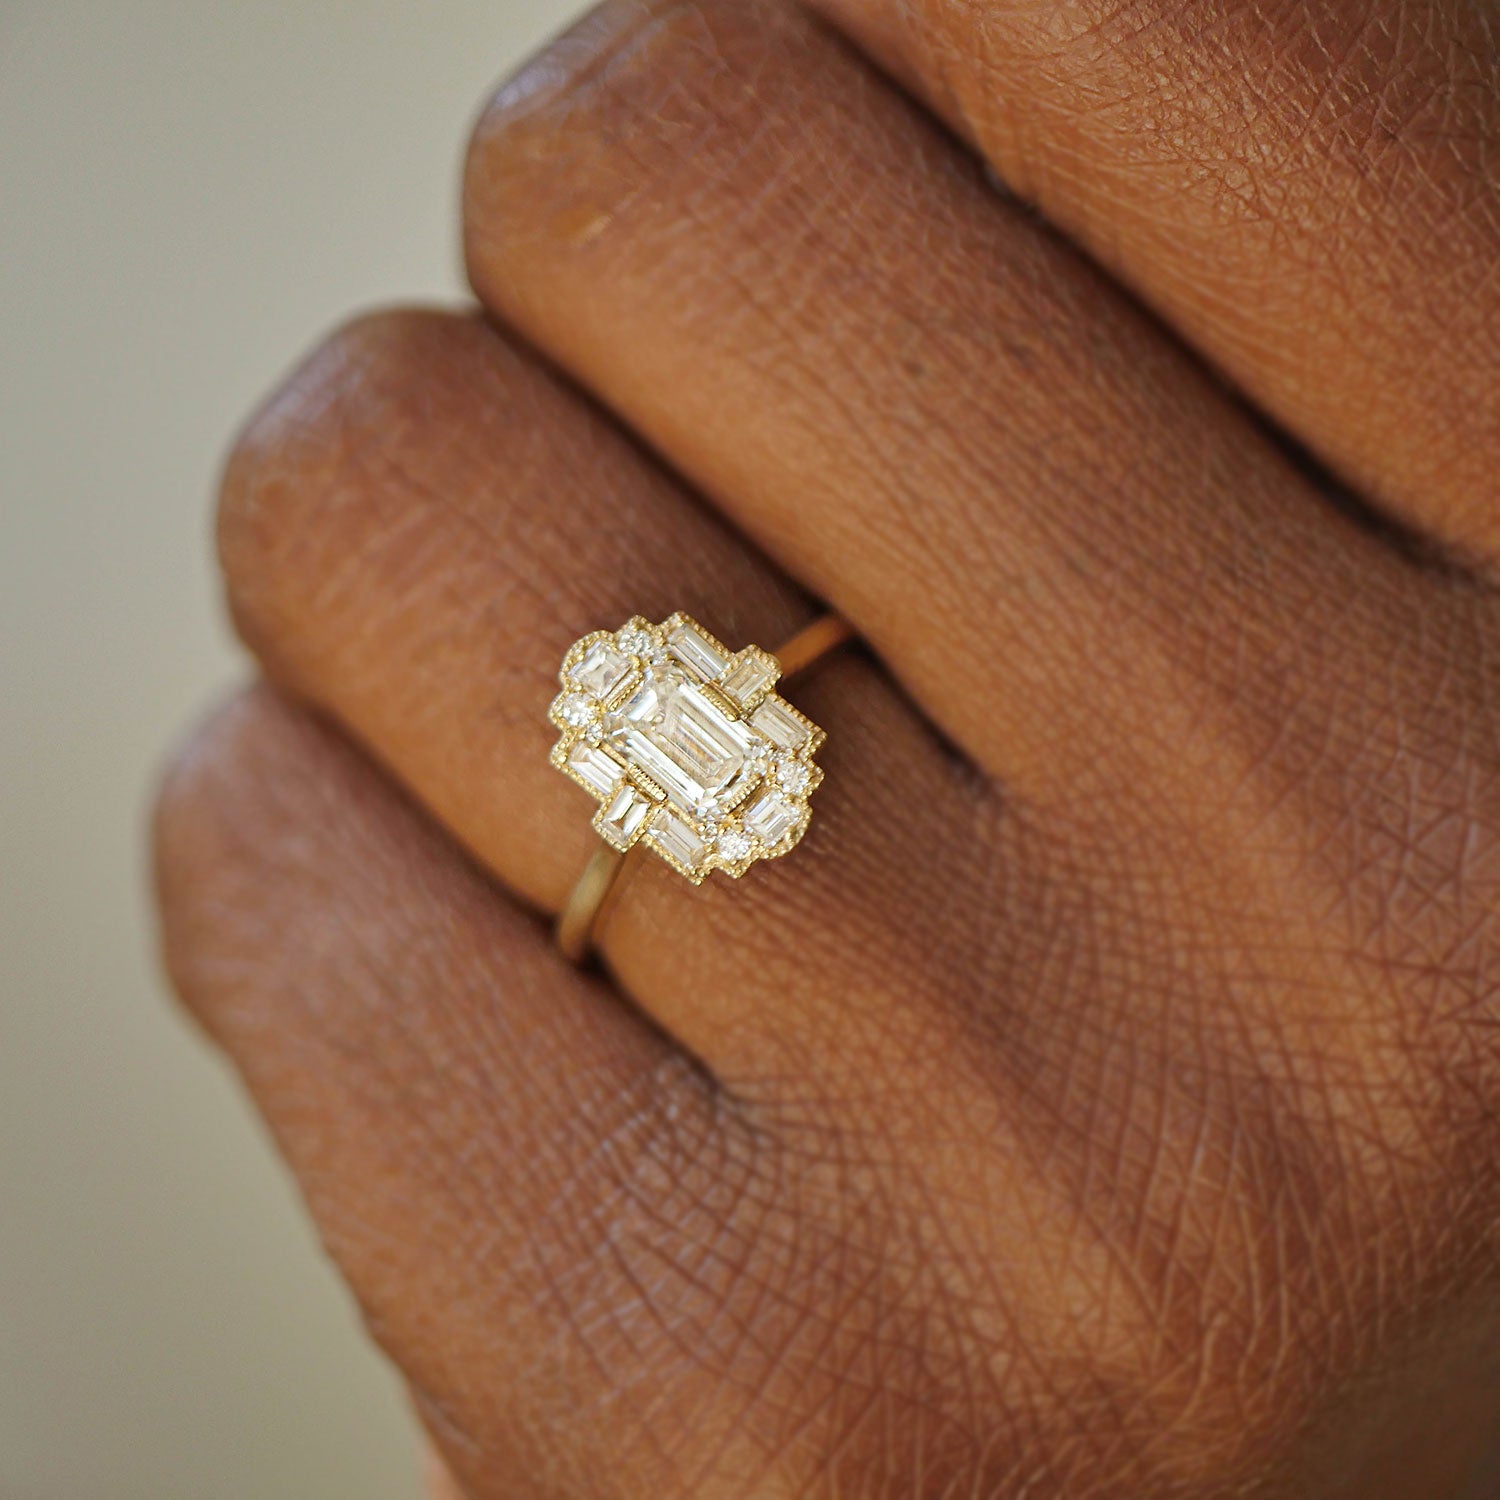 Deco Emerald Cut Diamond Ring